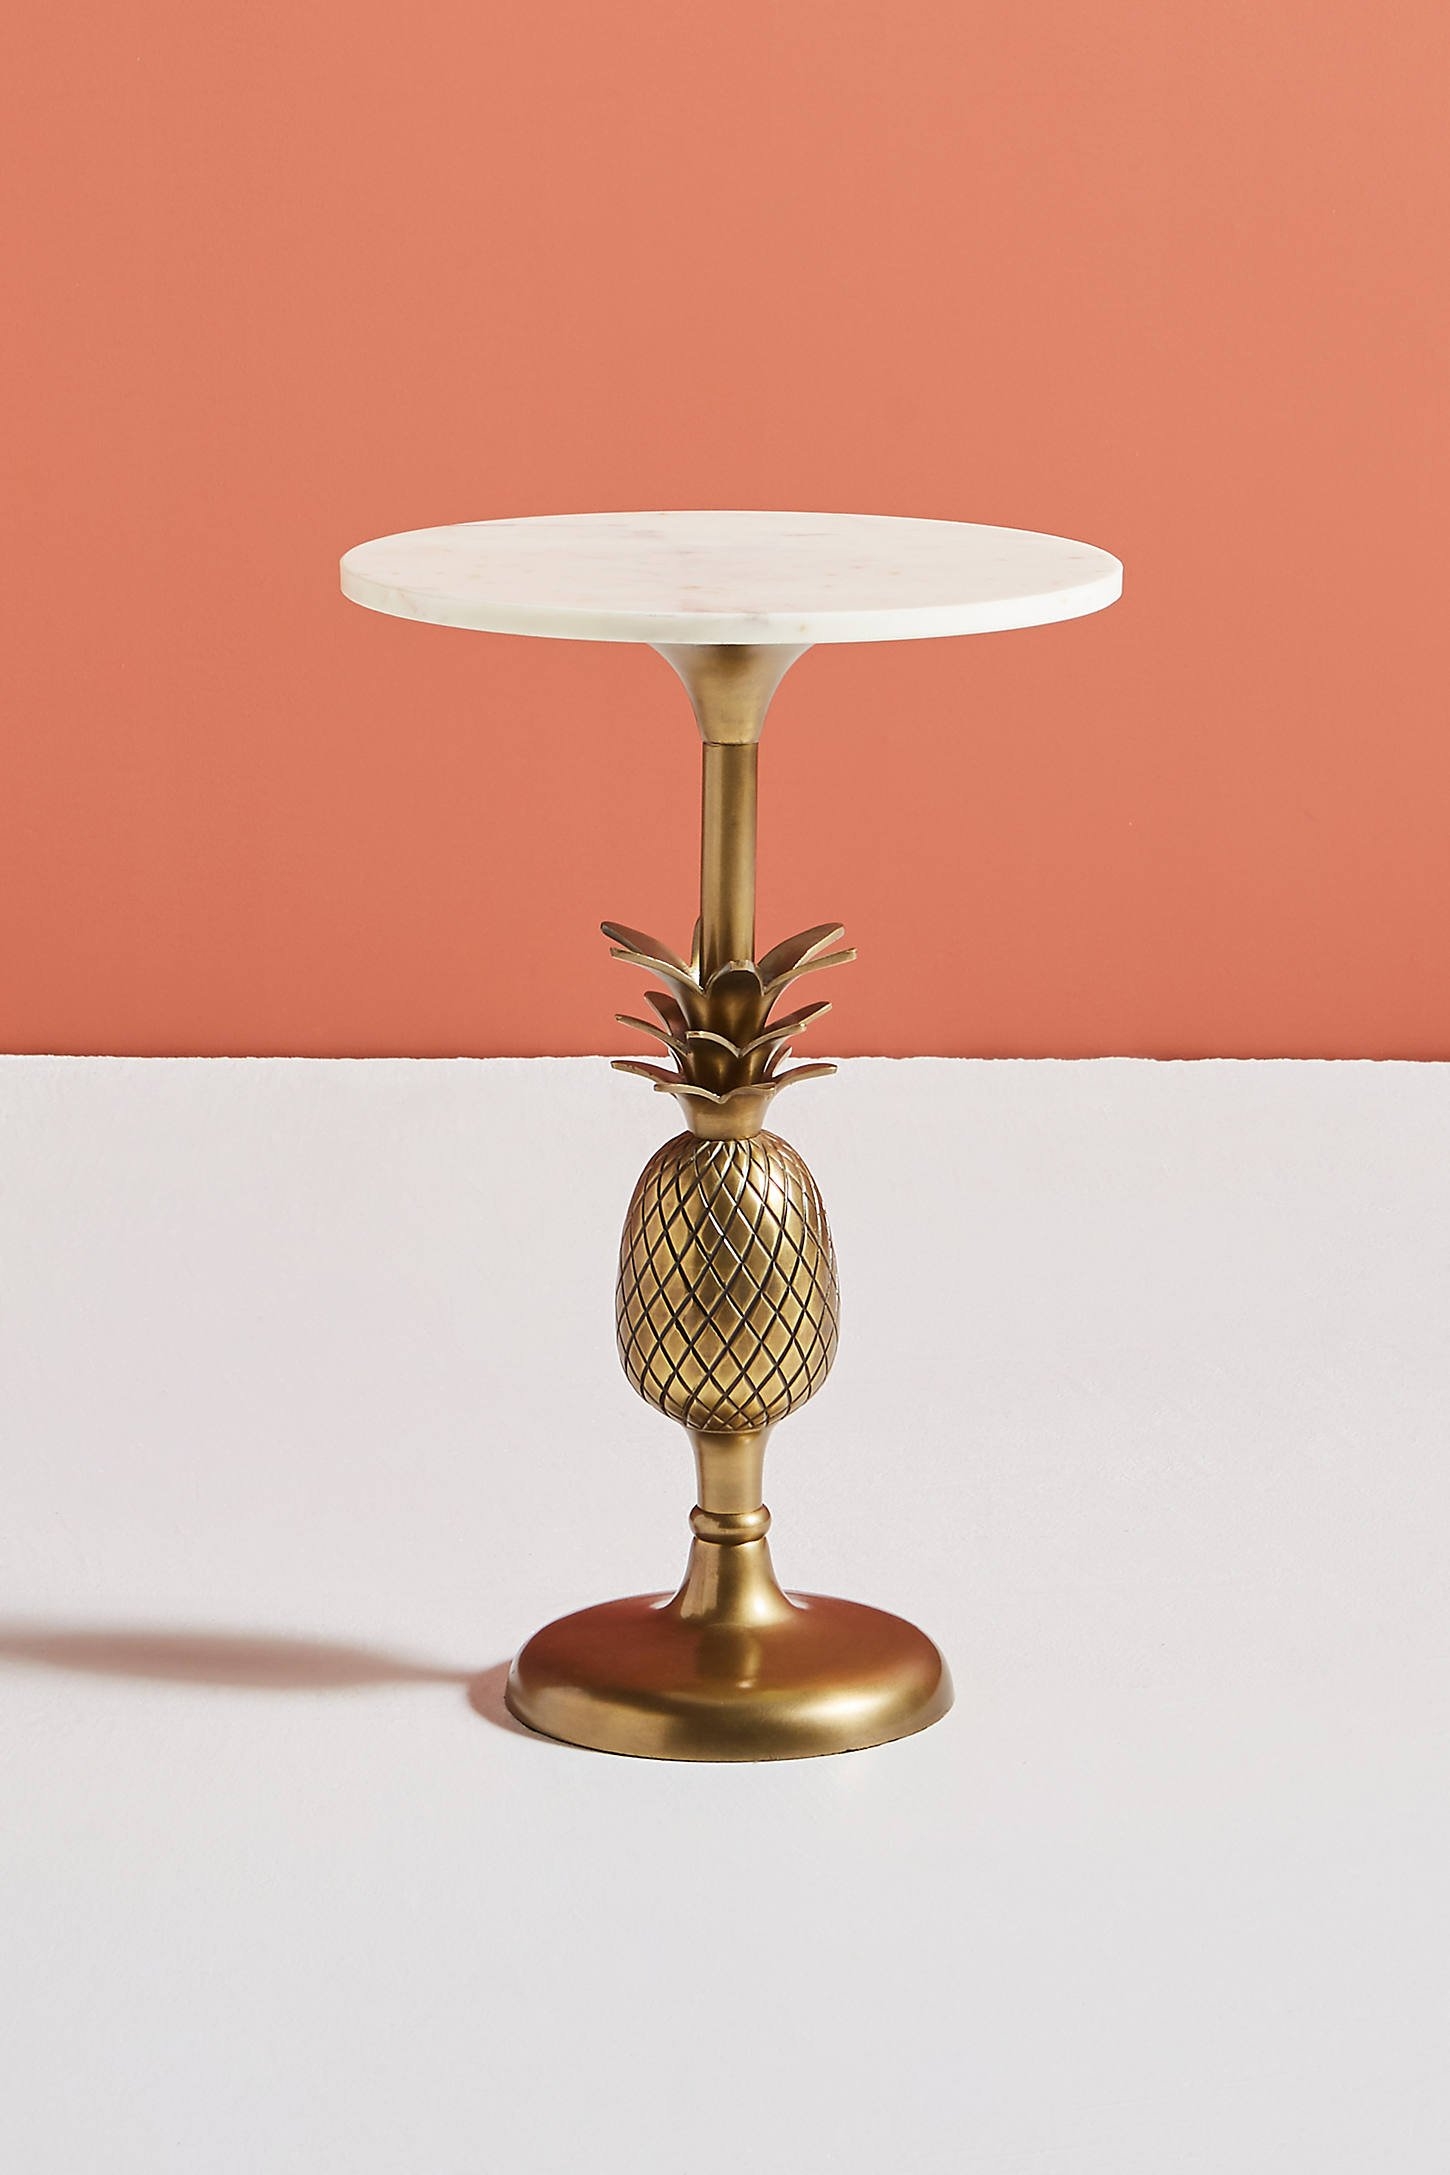 Pineapple Pedestal Side Table - Image 0